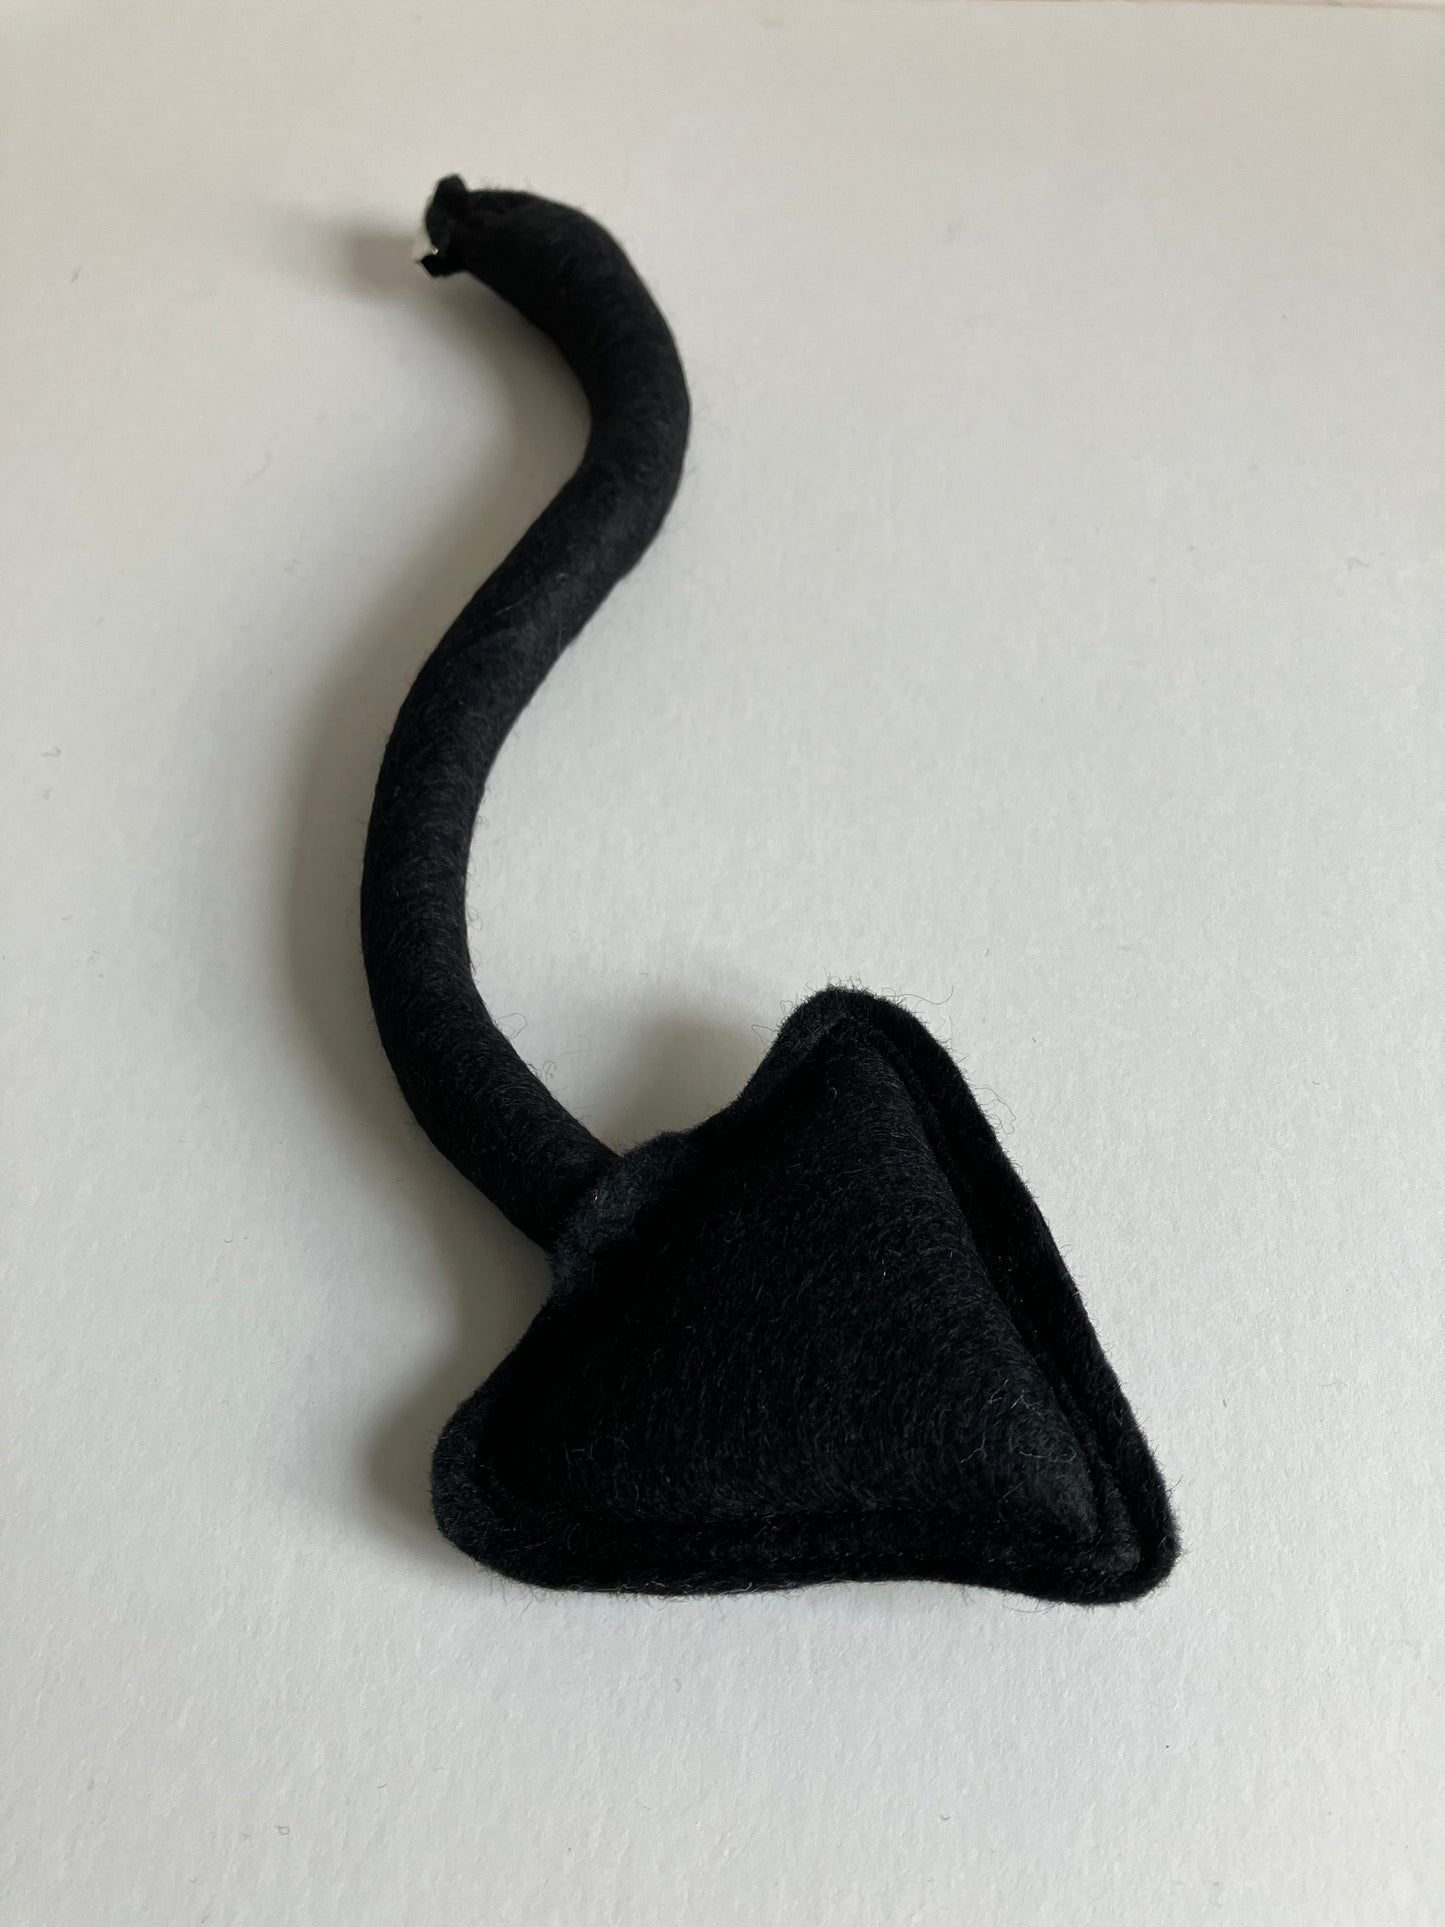 Clip on Devil or Warlock Tail Made of Black Felt